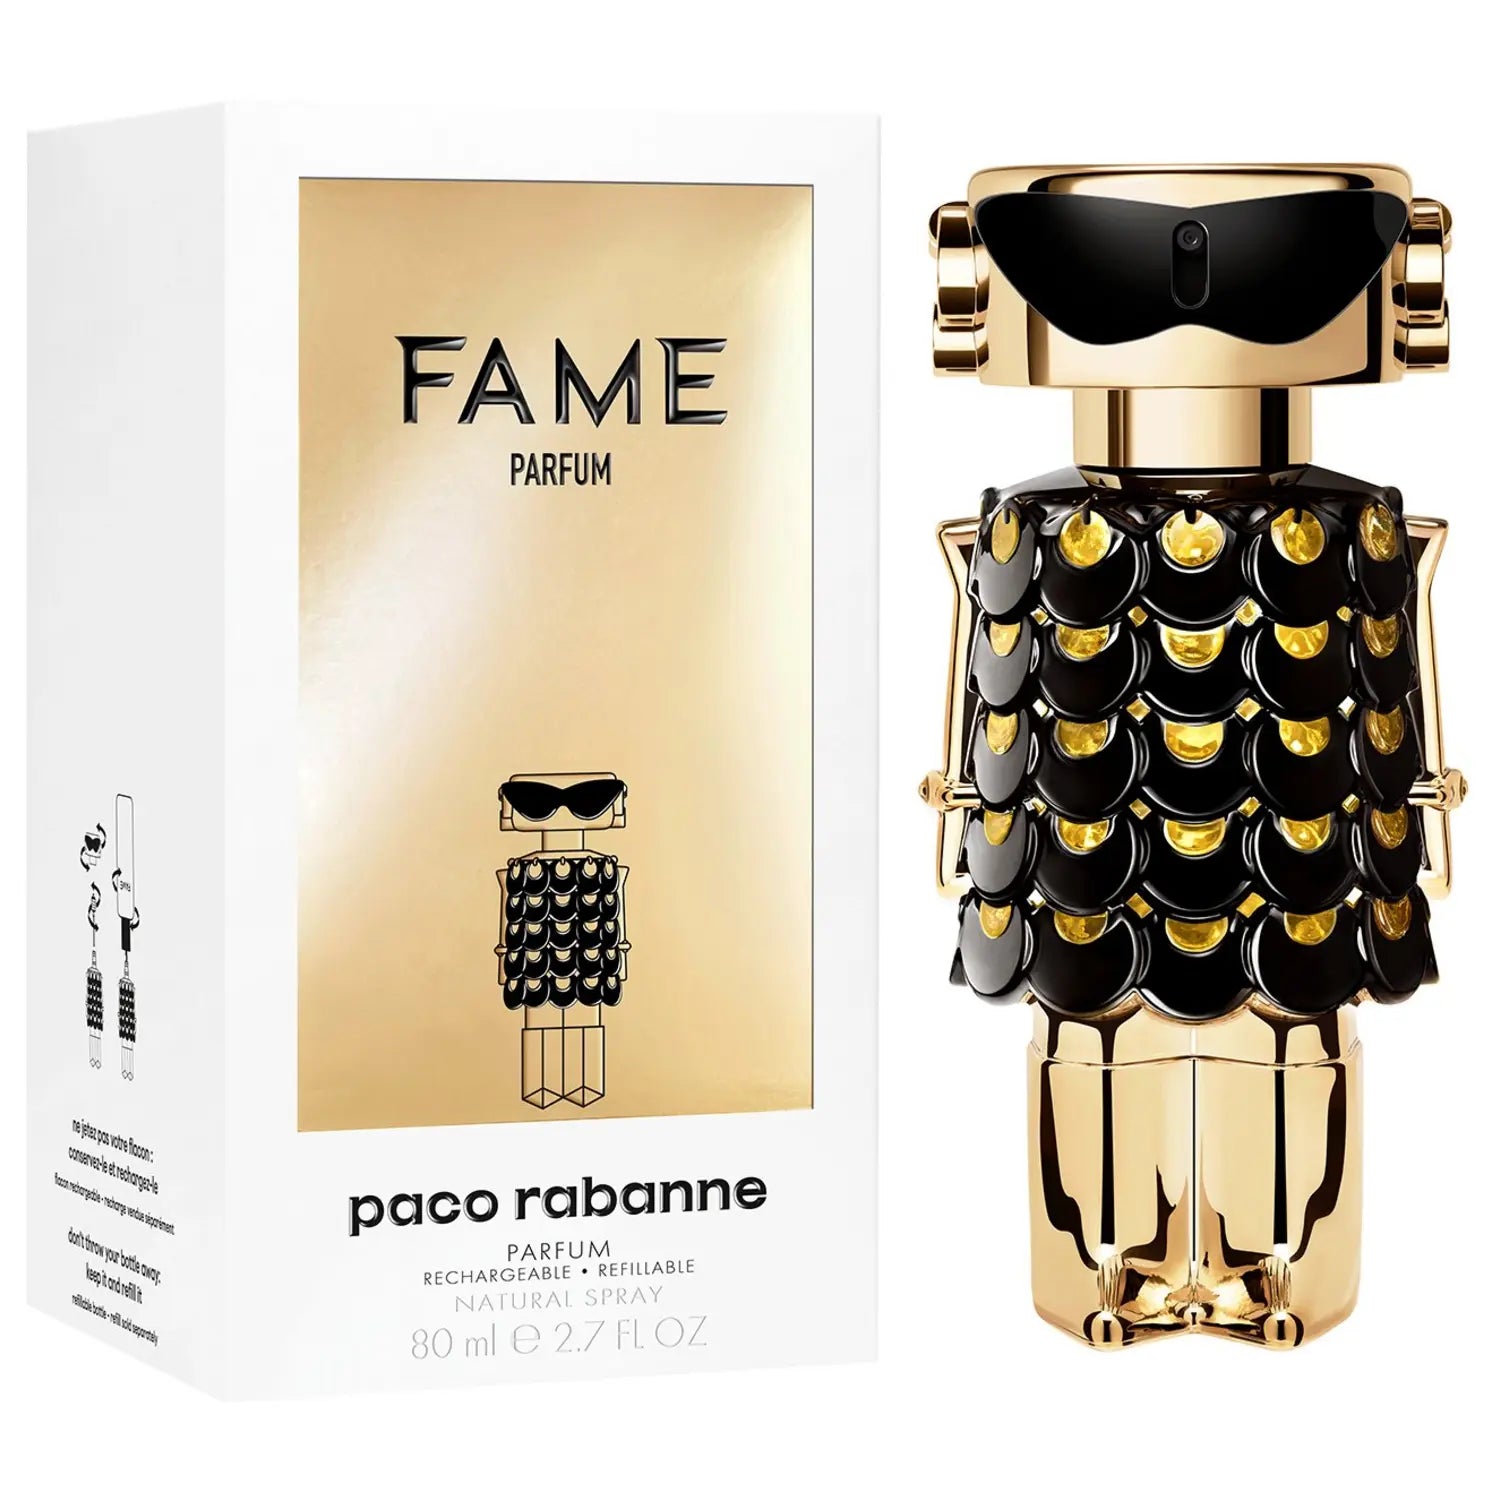 Fame Parfum by Paco Rabanne 2.7 oz Parfum Spray for Women